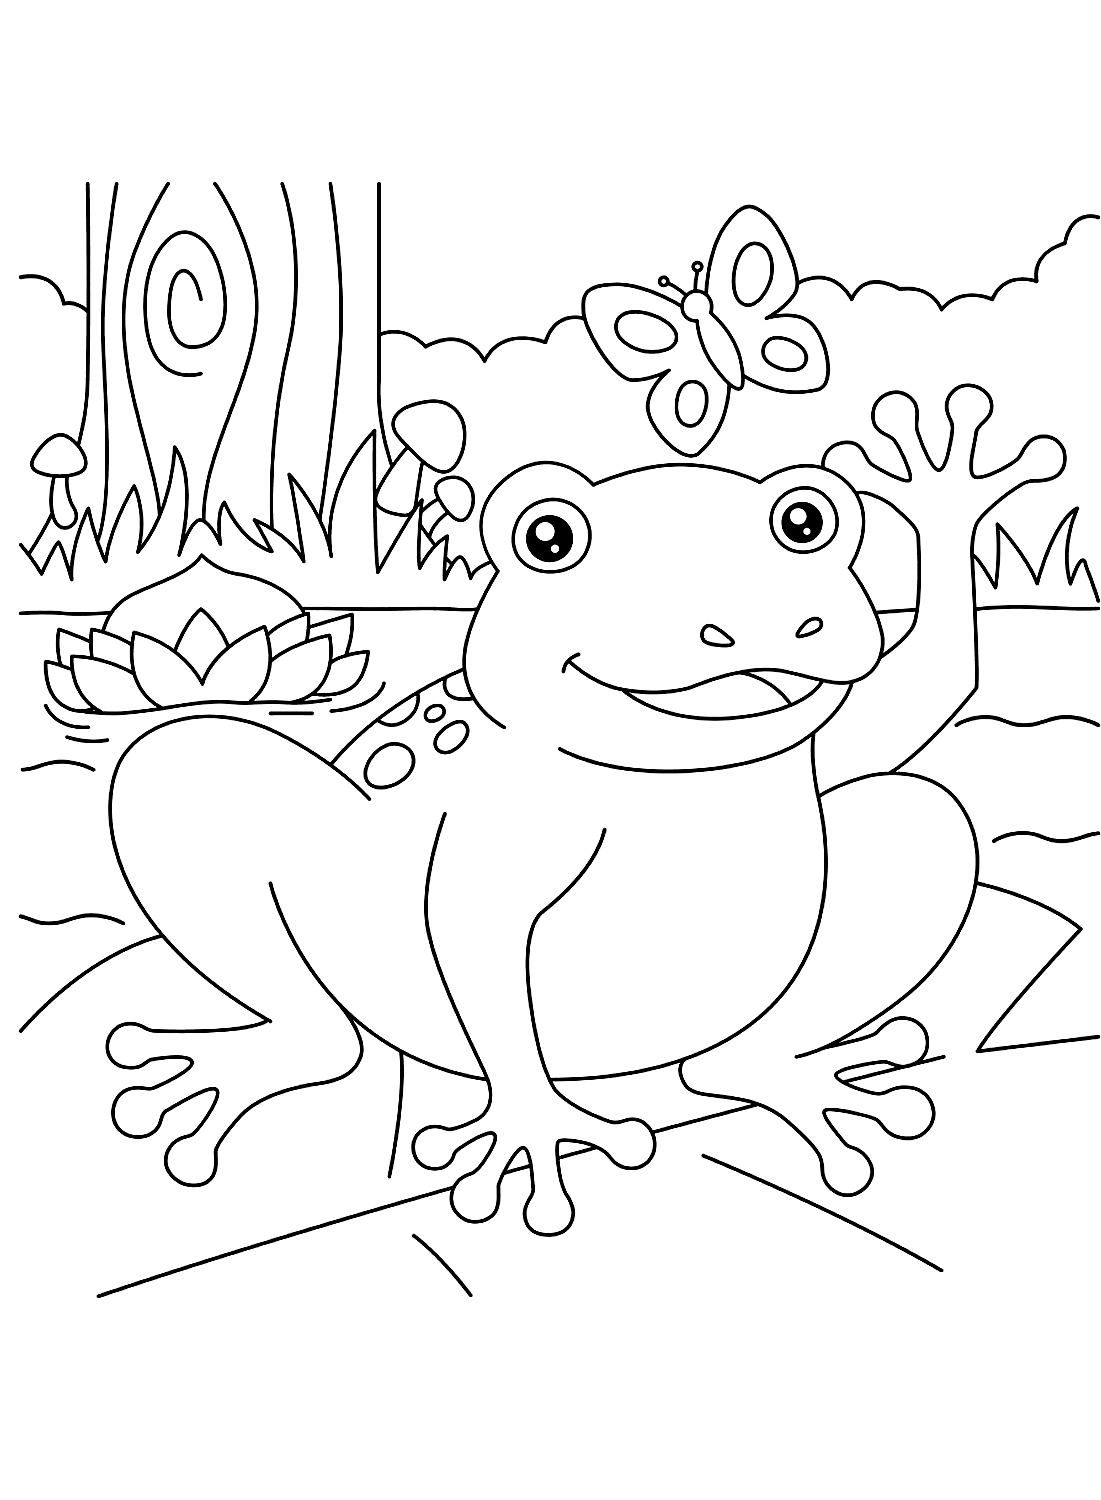 Fun frog coloring sheet